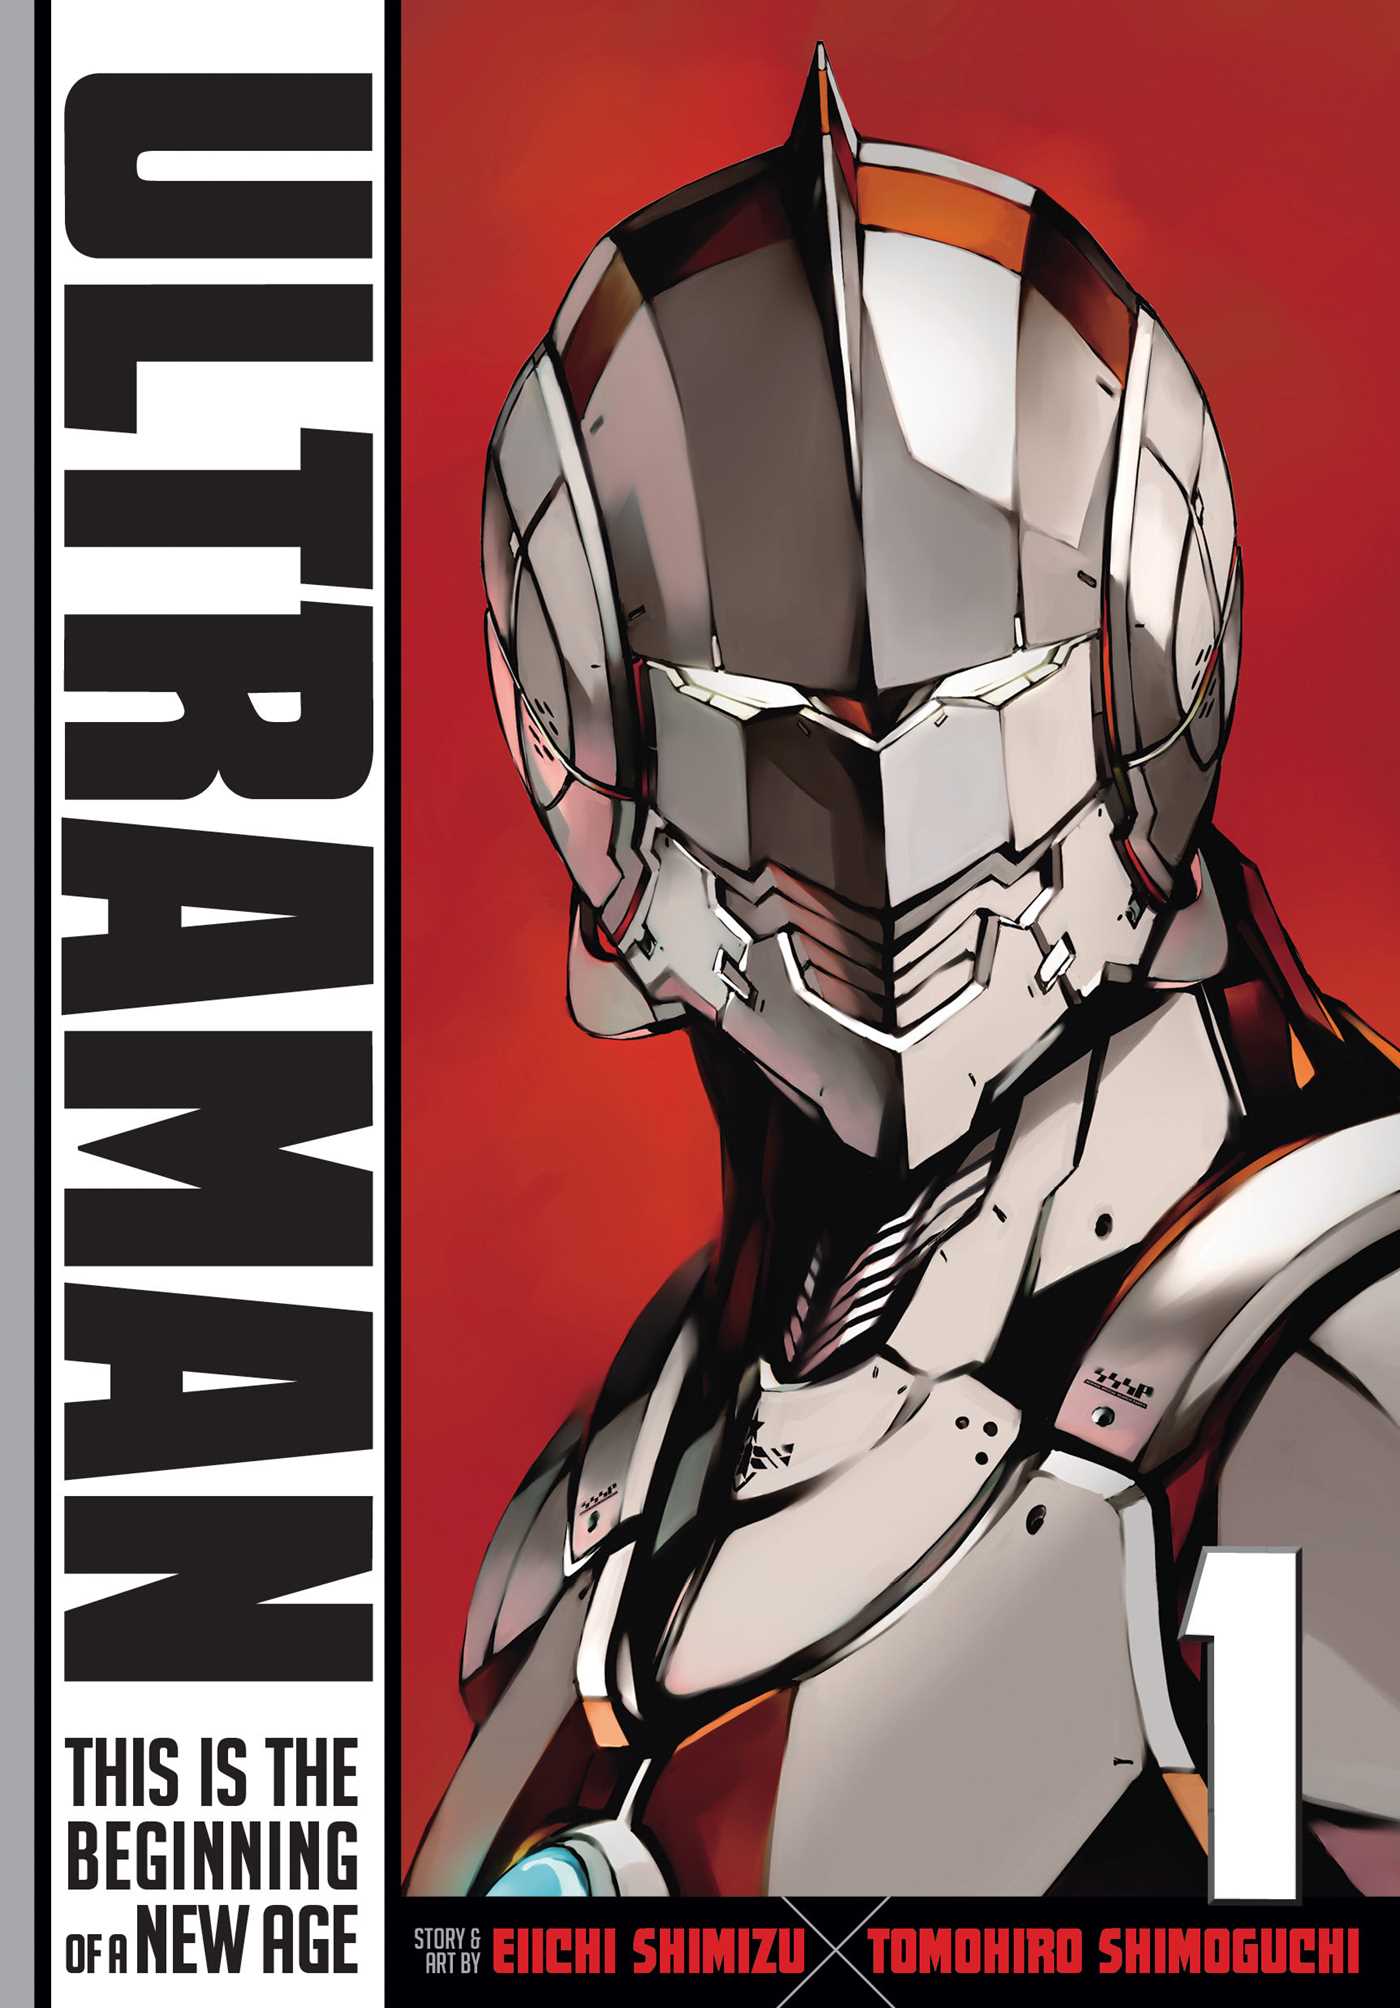 Ultraman Volume 1 (2011) Cover Art featuring ultra man in armor